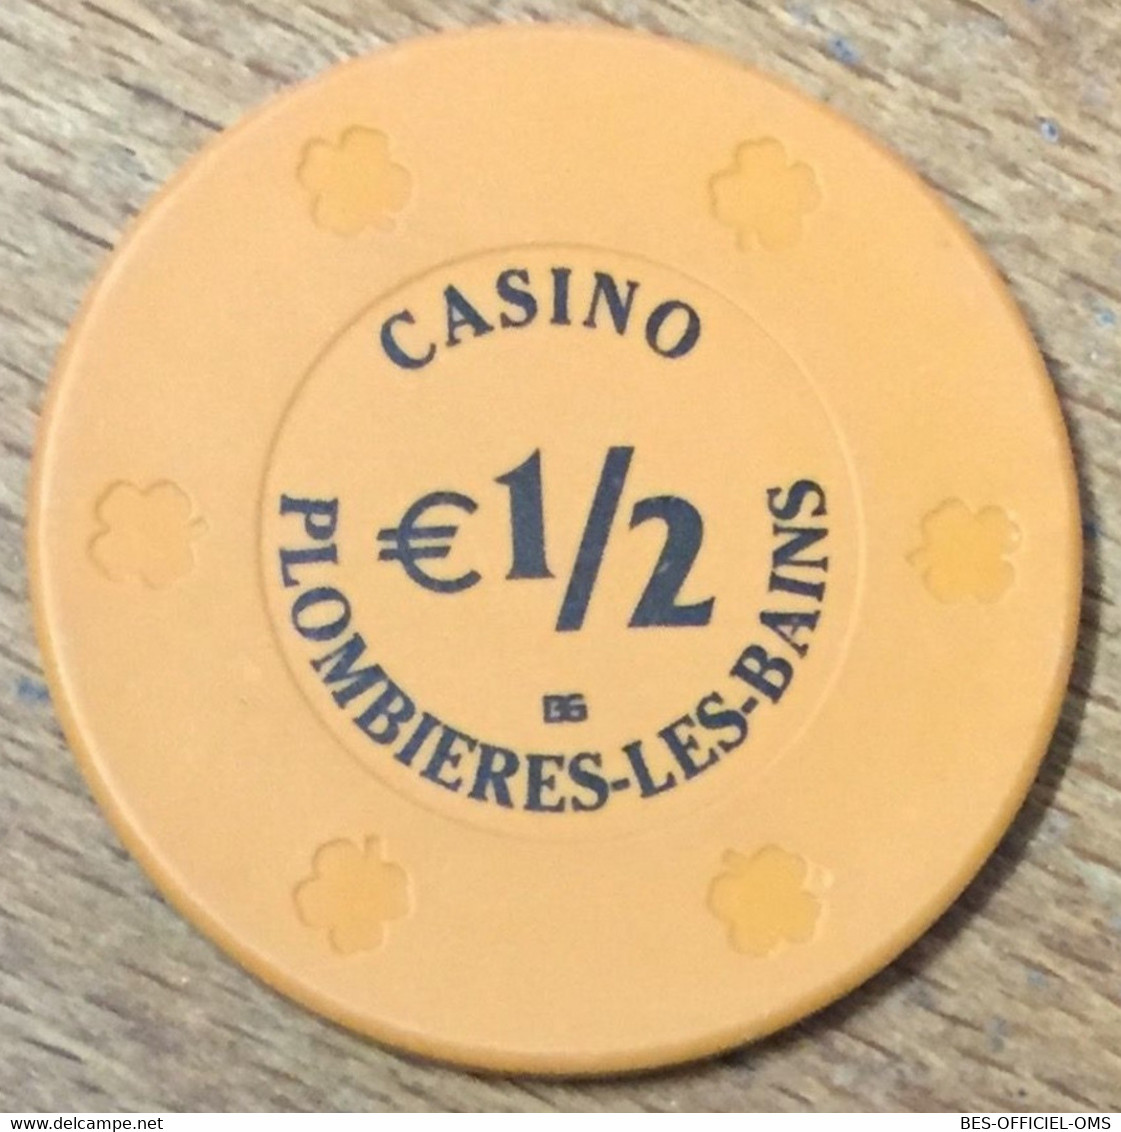 88 PLOMBIERES-LES-BAINS CASINO JETON DE 1/2 EURO CHIP TOKENS COINS GAMING - Casino